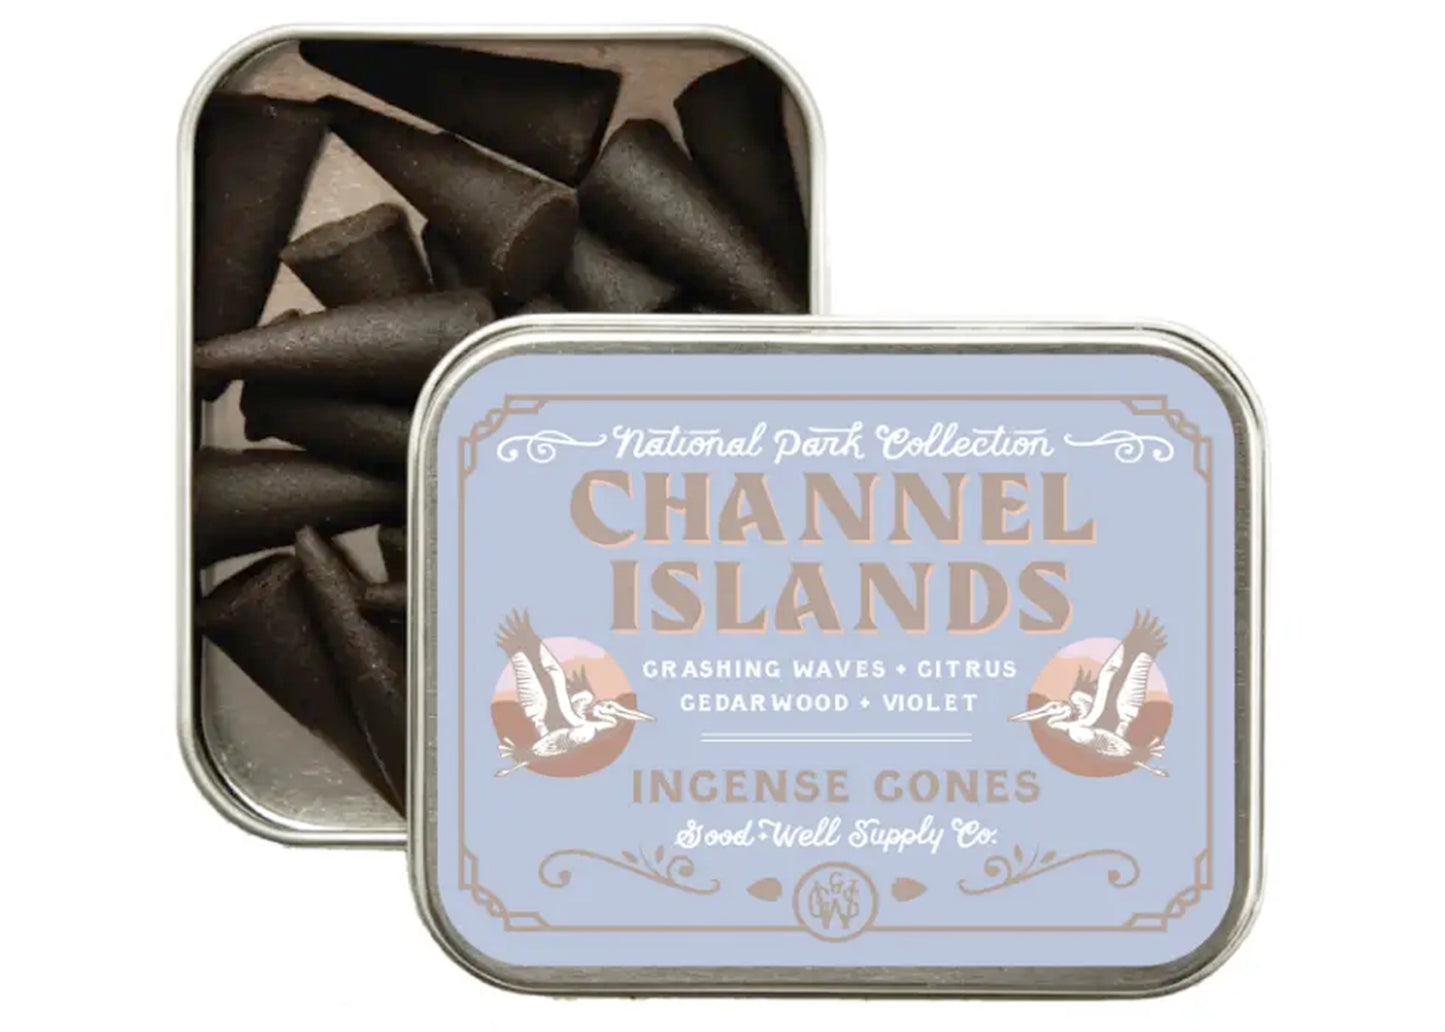 Channel Islands Incense Cones